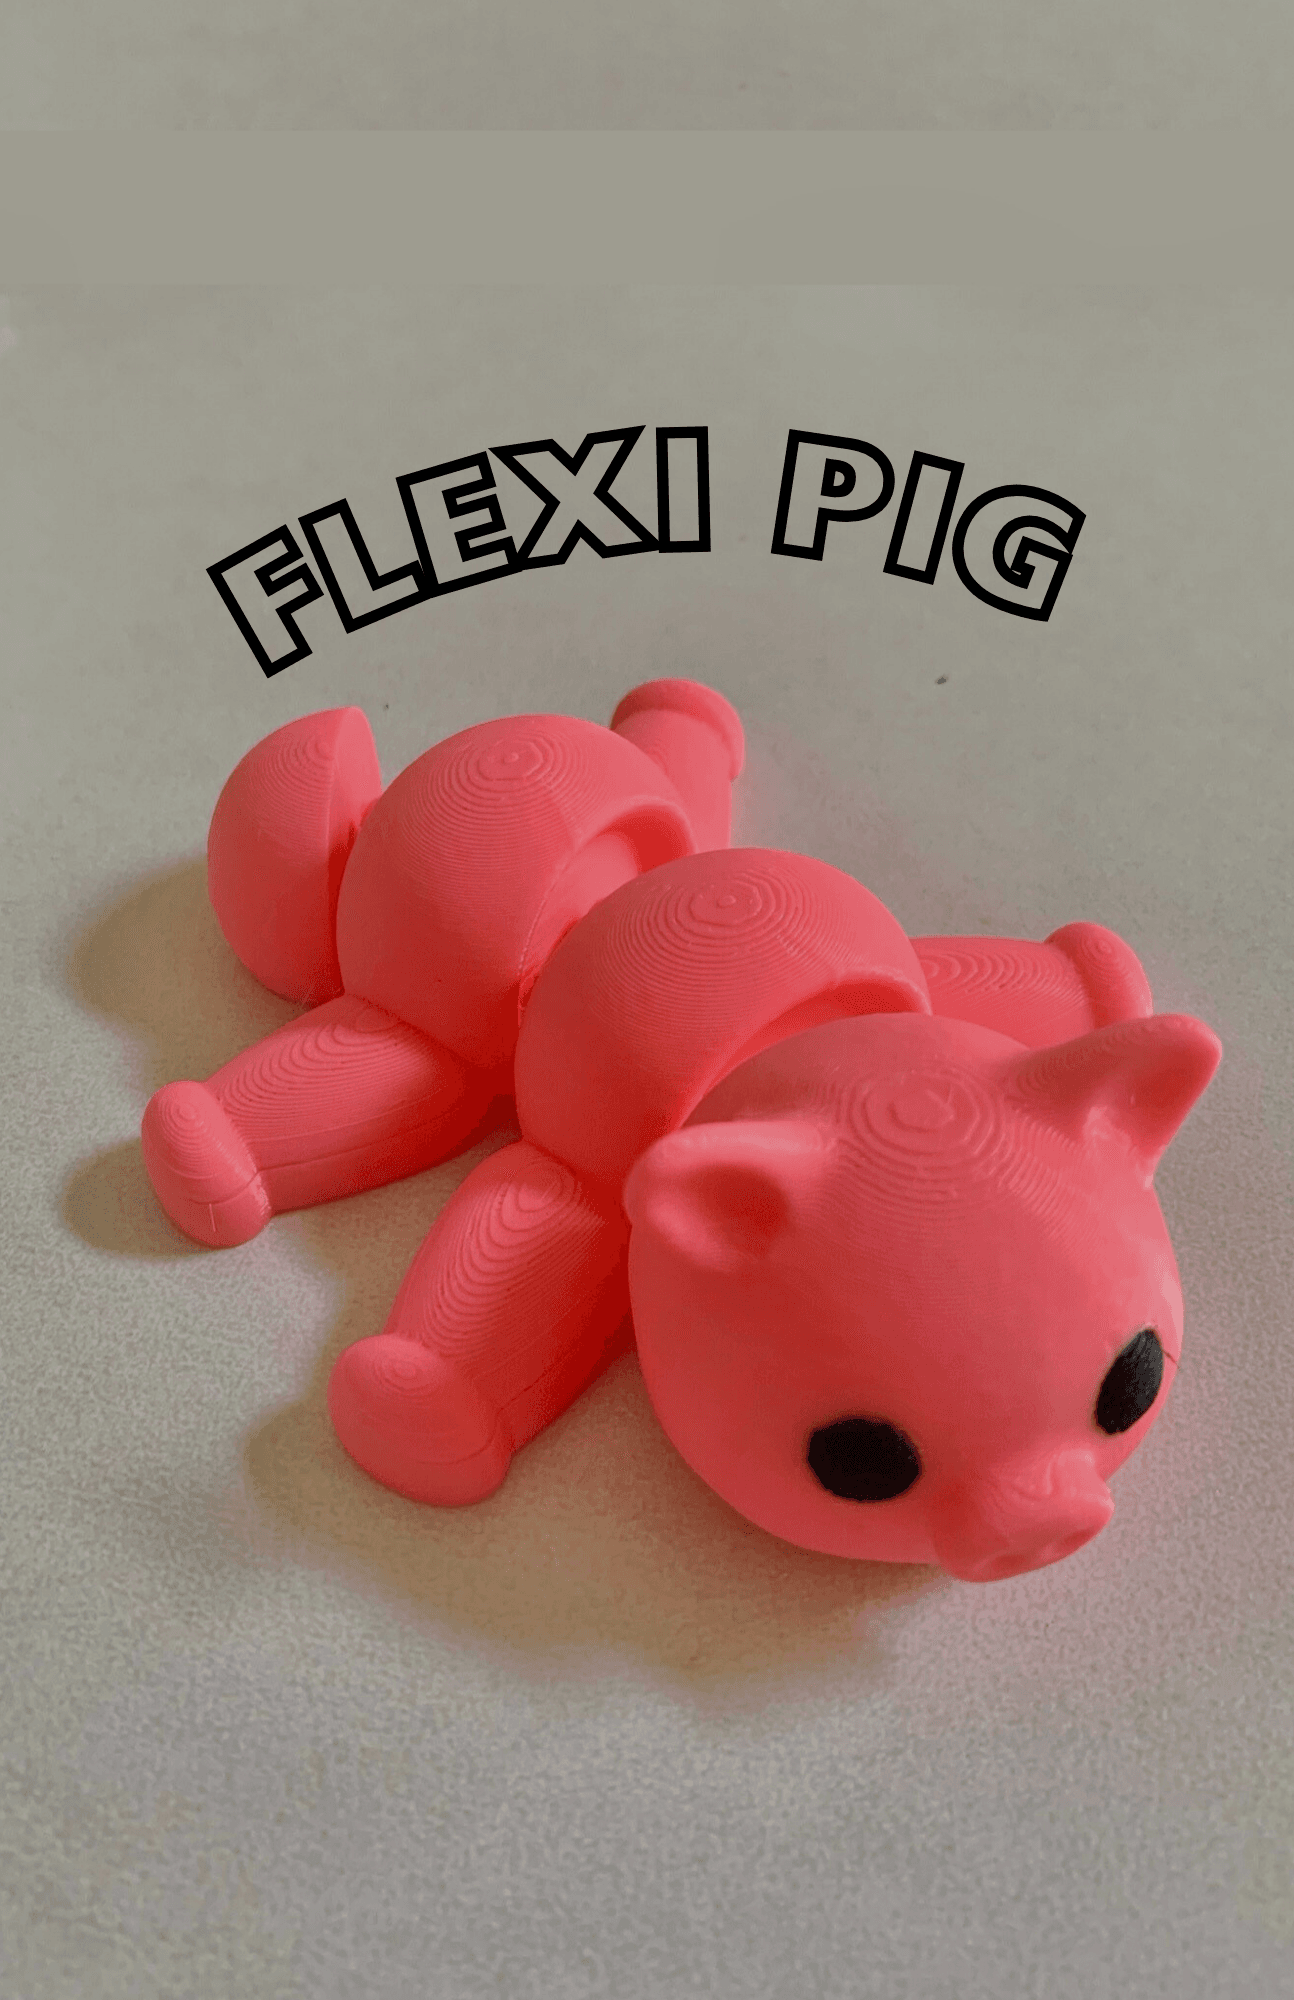 New Flexi Pig!